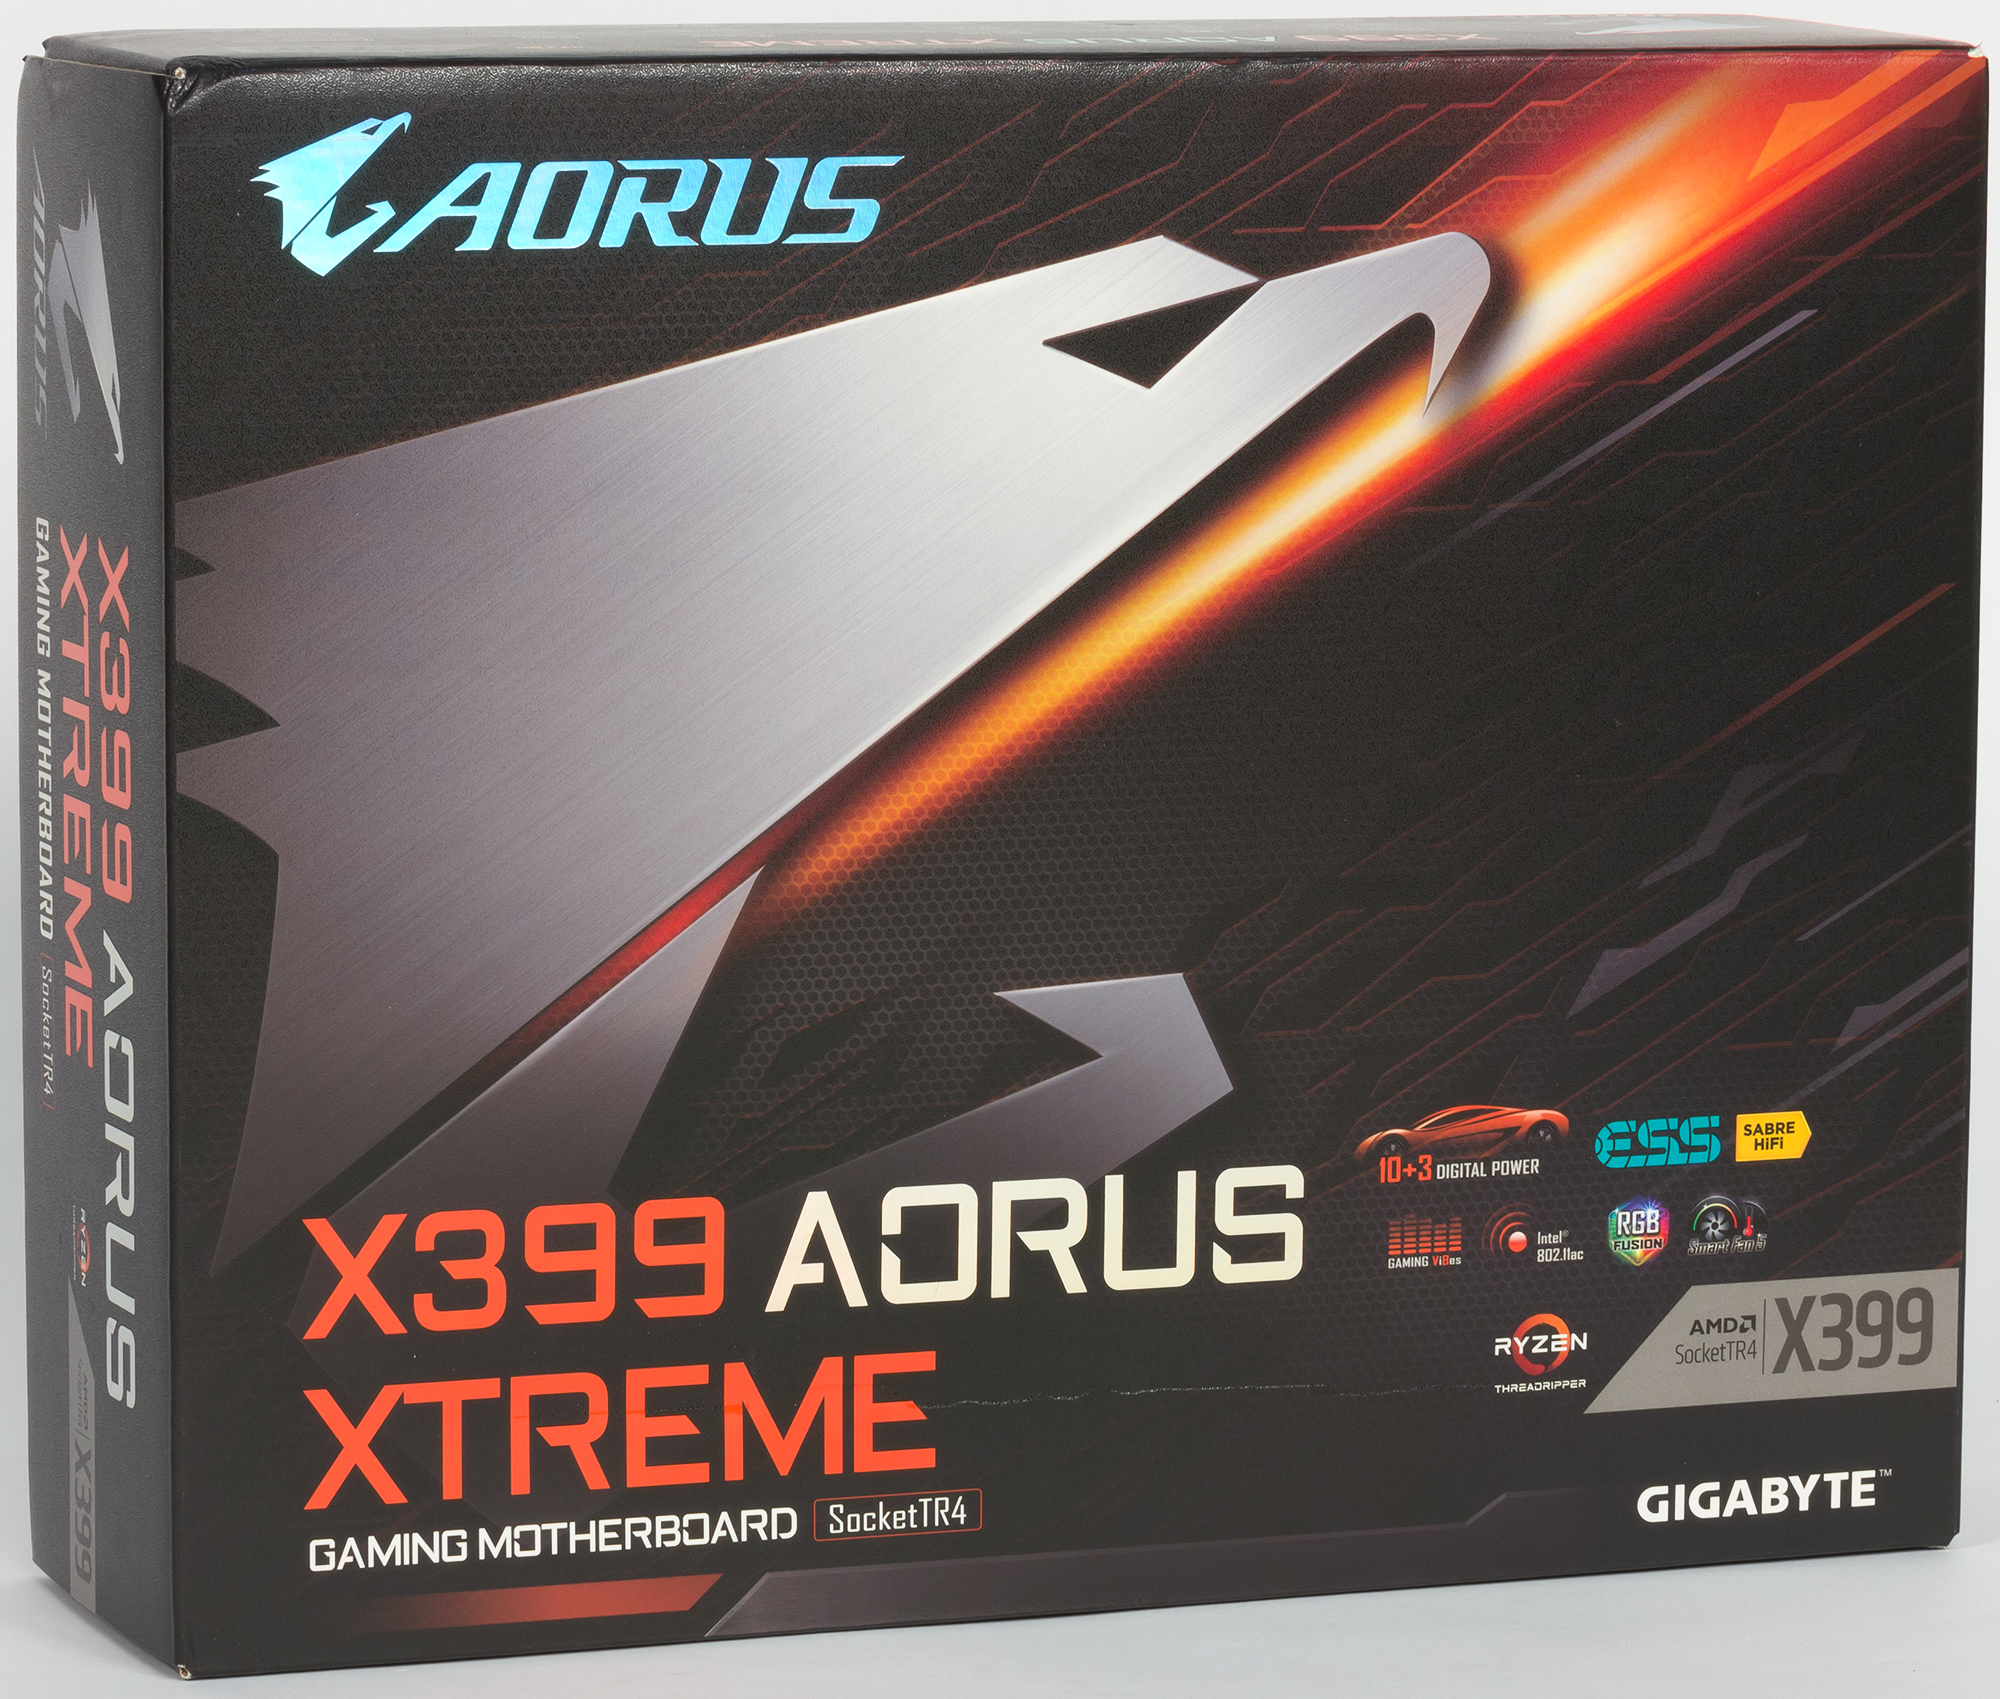 Amd x6 купить. X399 AORUS Xtreme. 3090 AORUS extreme фигурка. X399 AORUS Xtreme SSD m2. Ryzen Threadripper 1900x материнская плата.